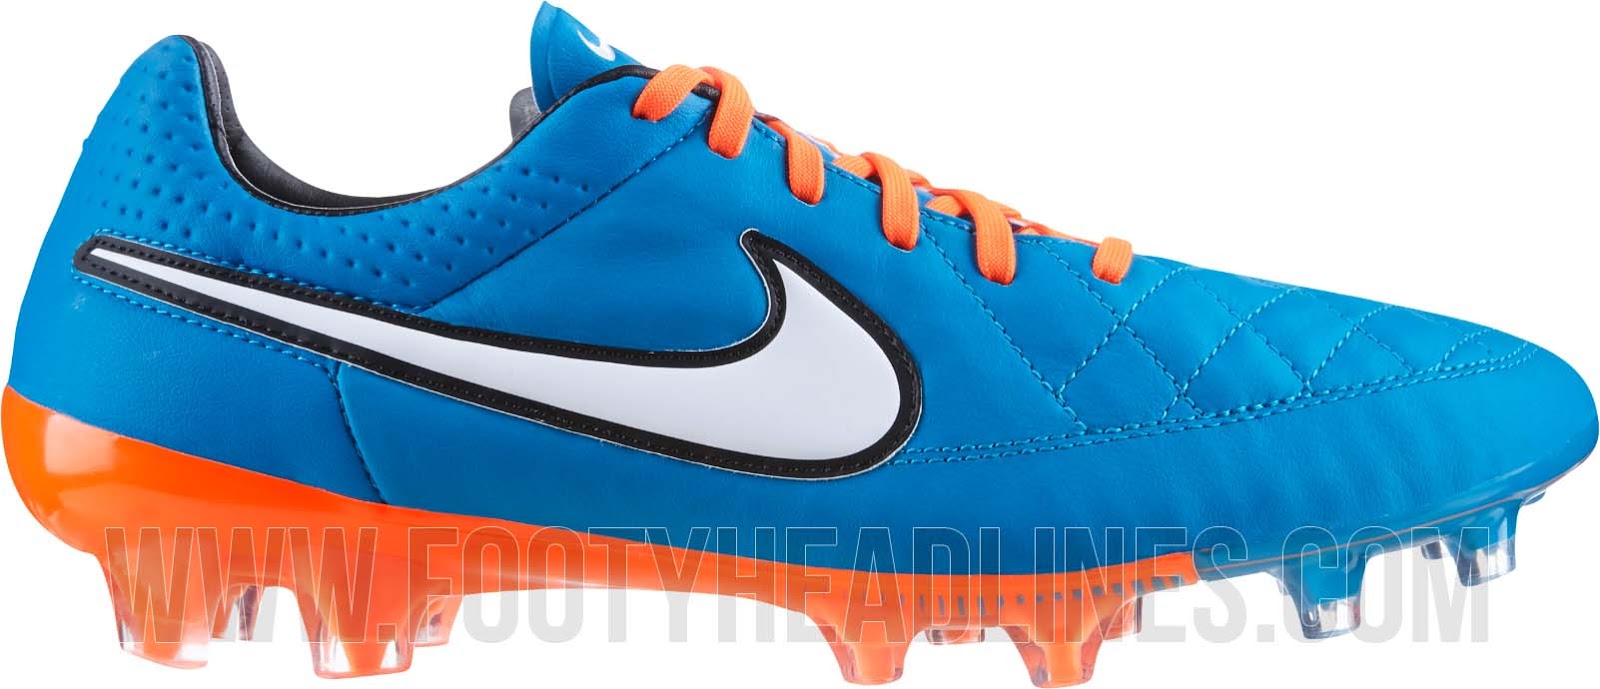 Moedig aan Blokkeren Verwant Blue / Orange Nike Tiempo Legend V 14-15 Boot Colorway Released - Footy  Headlines